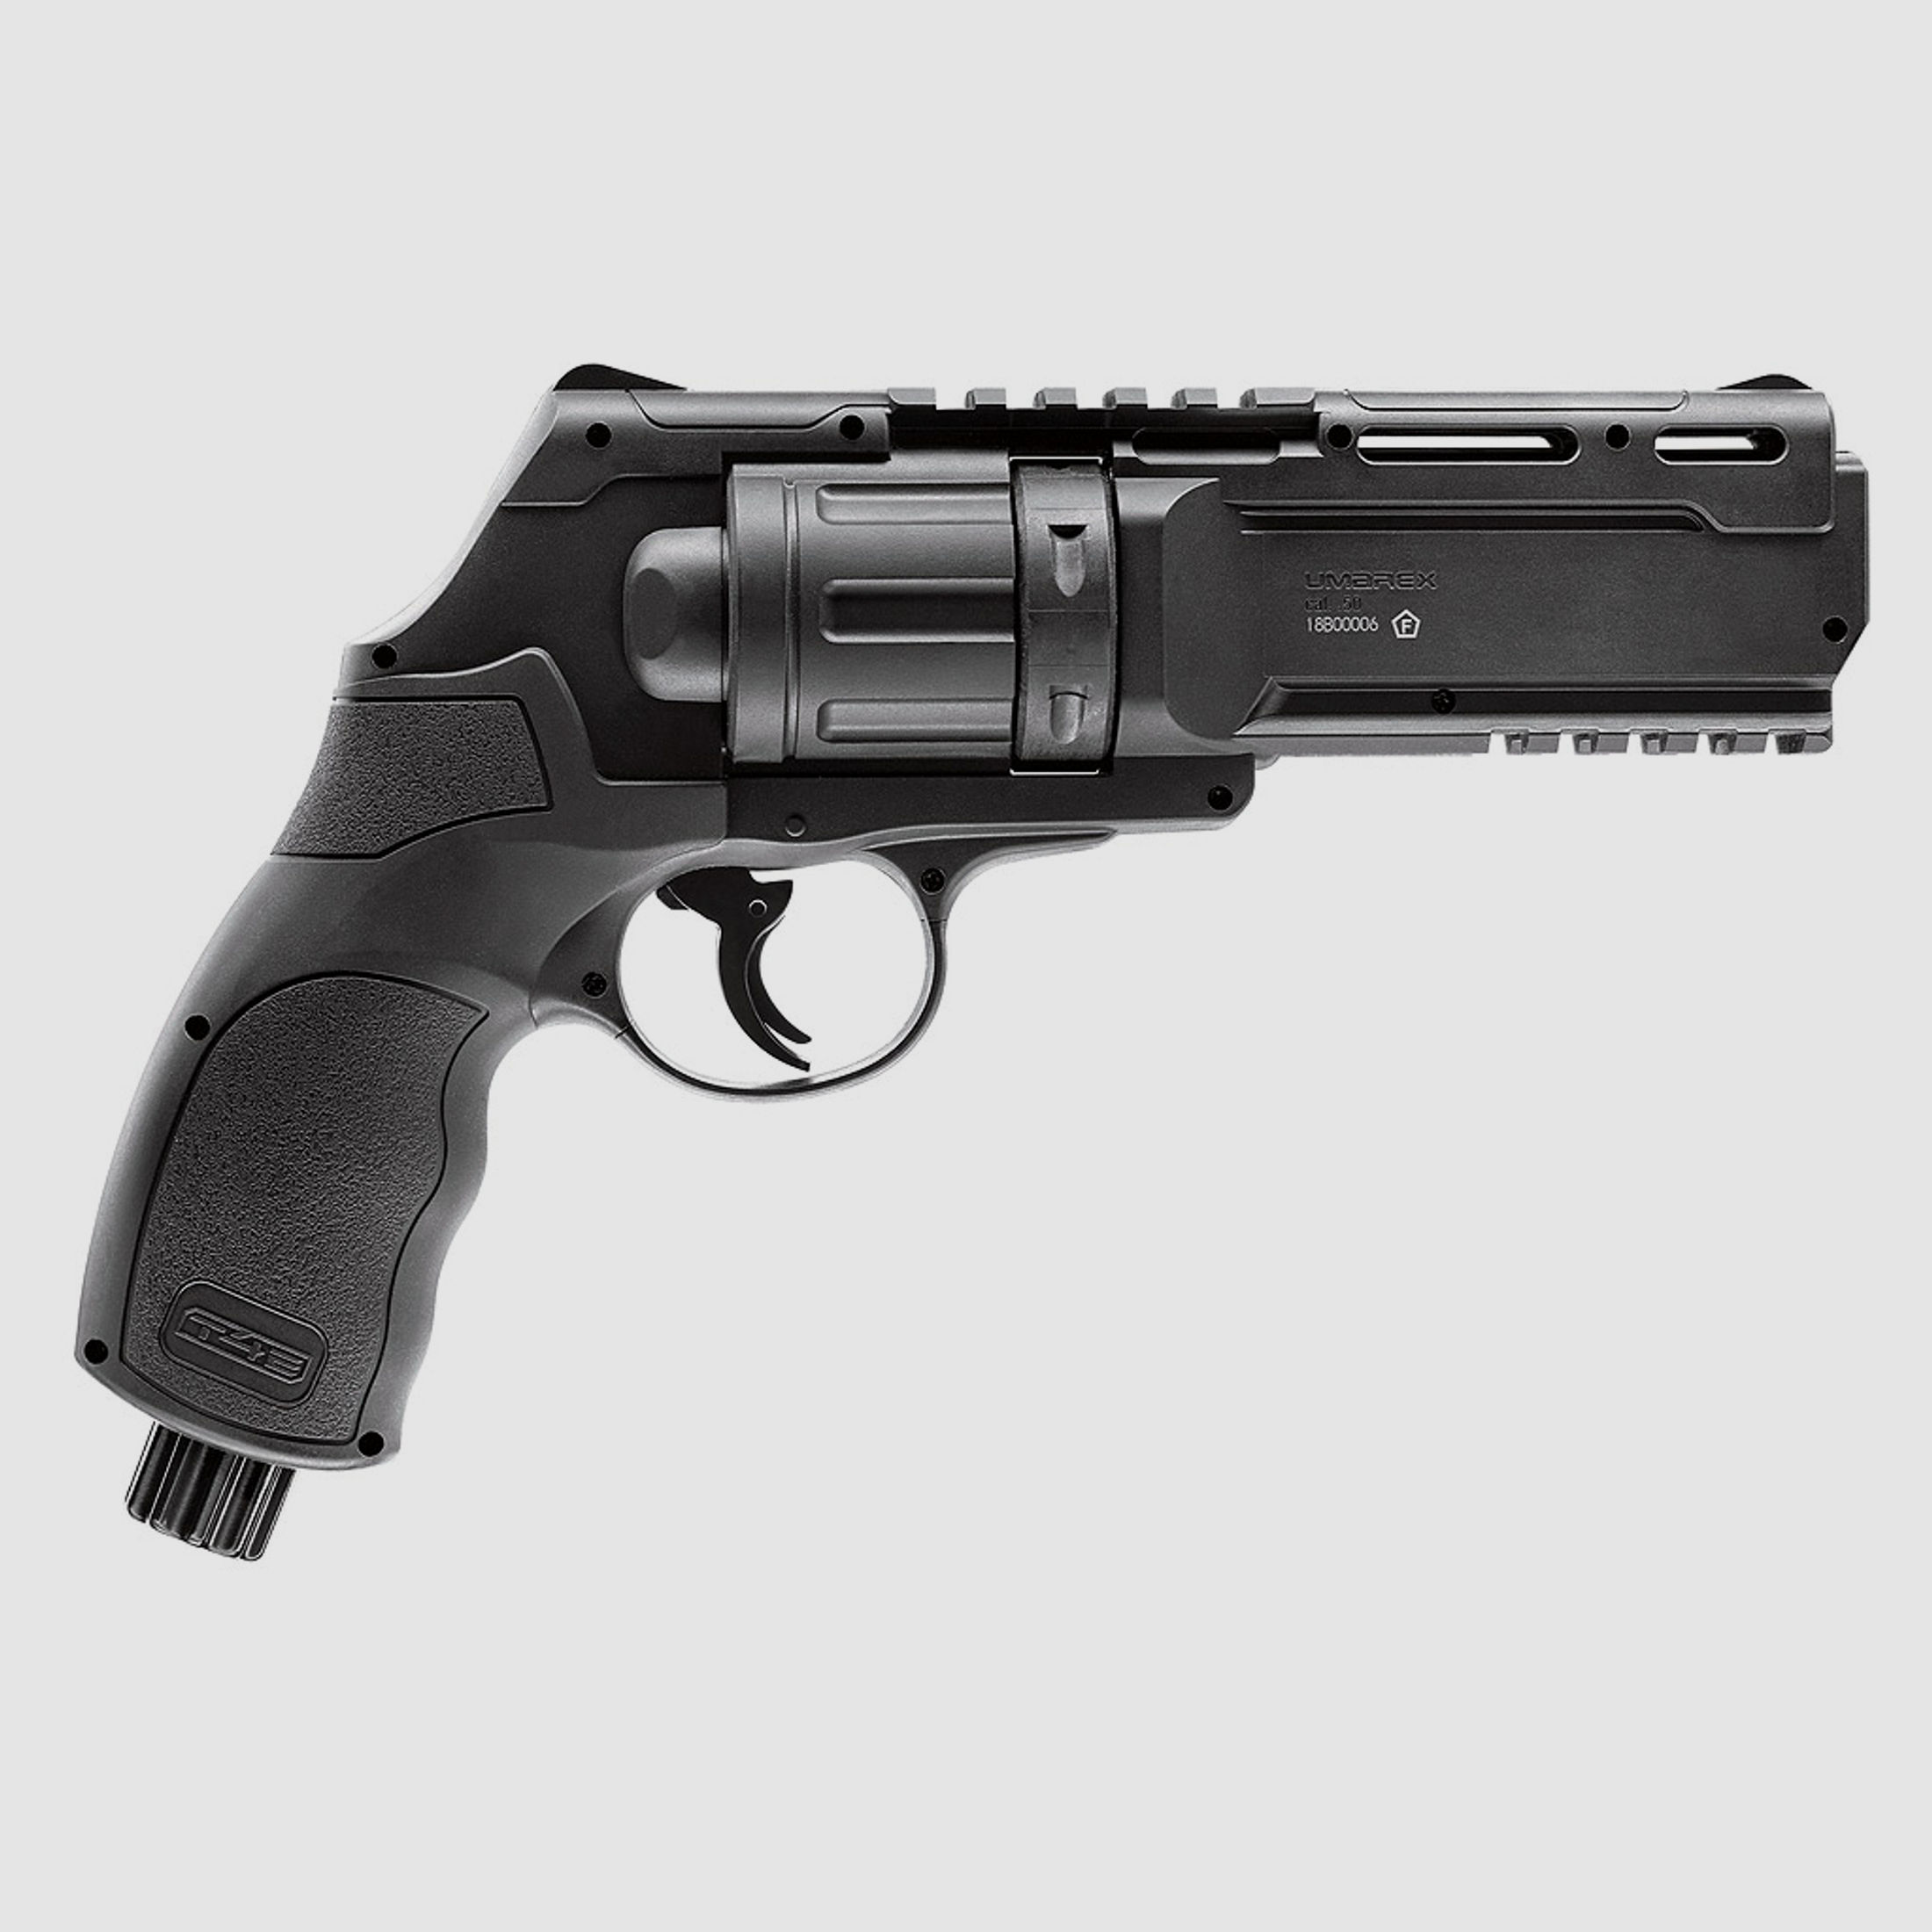 CO2 Markierer Home Defense Revolver Umarex T4E HDR 50 fĂĽr Gummi-, Pfeffer- u. Farbkugeln Kaliber .50 (P18) + 100 Rubberballs und 10 CO2 Kapseln